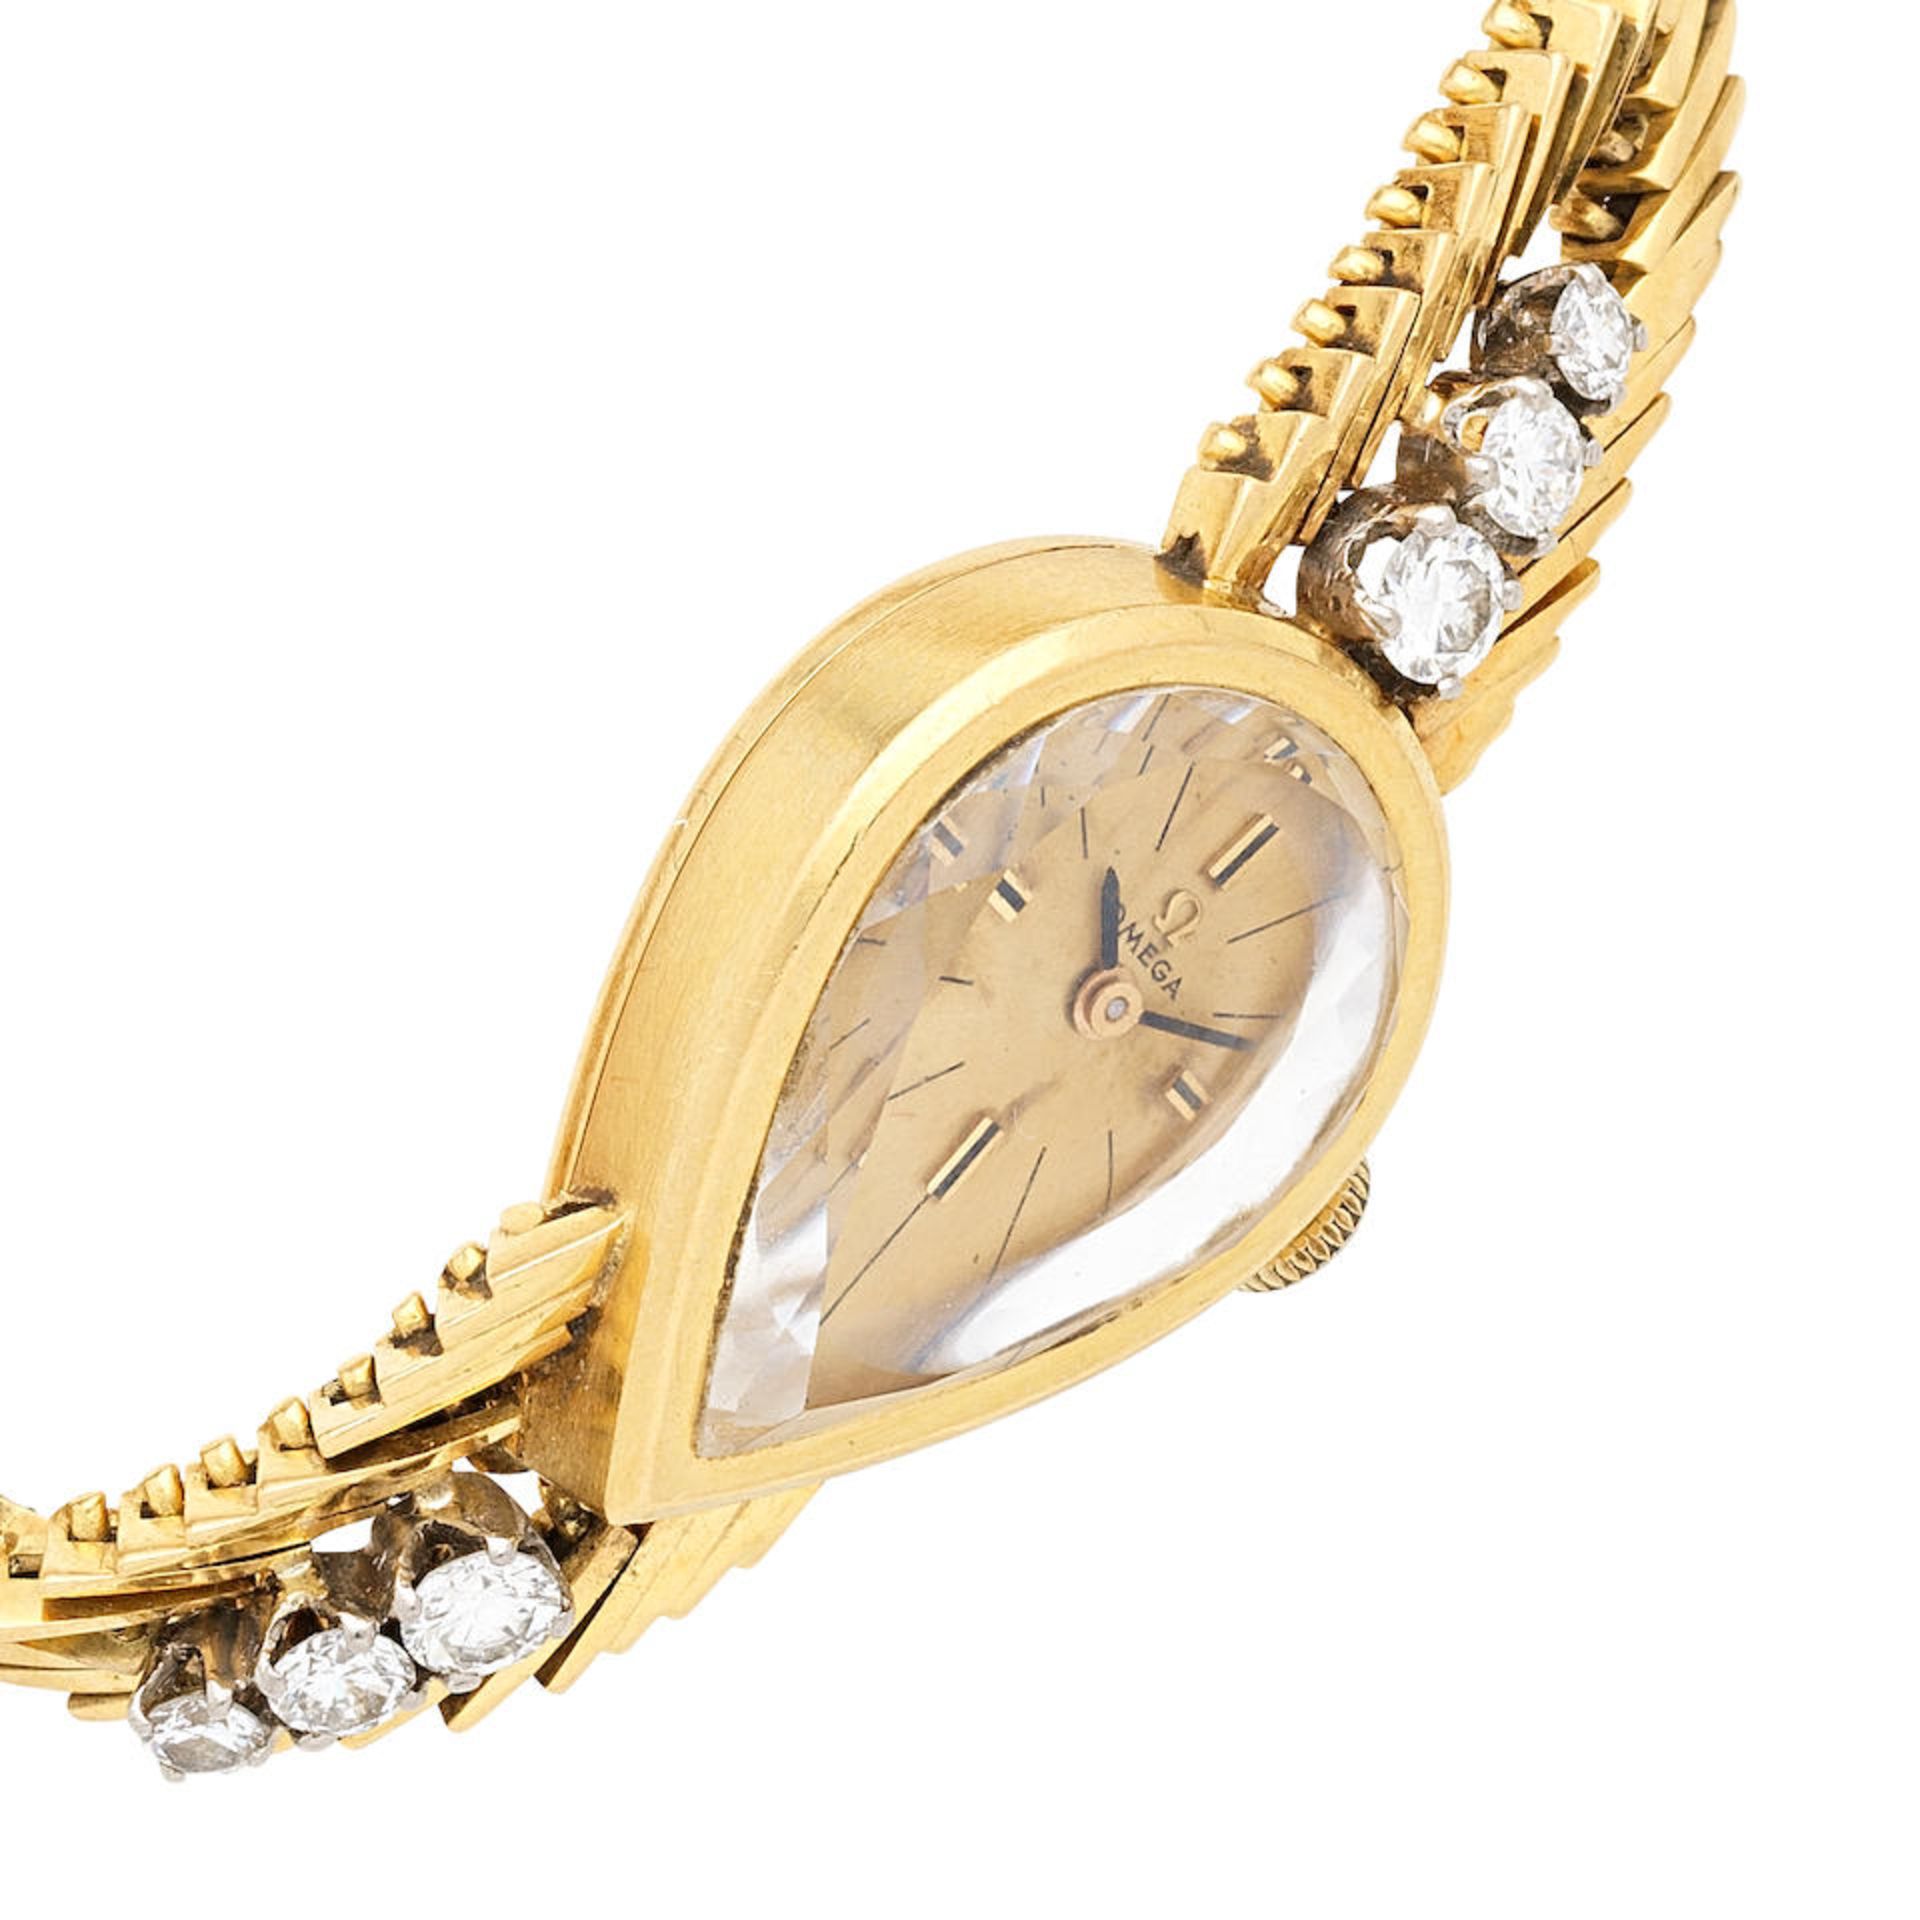 Omega. A lady's 18K gold and diamond set manual wind oval bracelet watch Import mark for London ... - Image 4 of 5